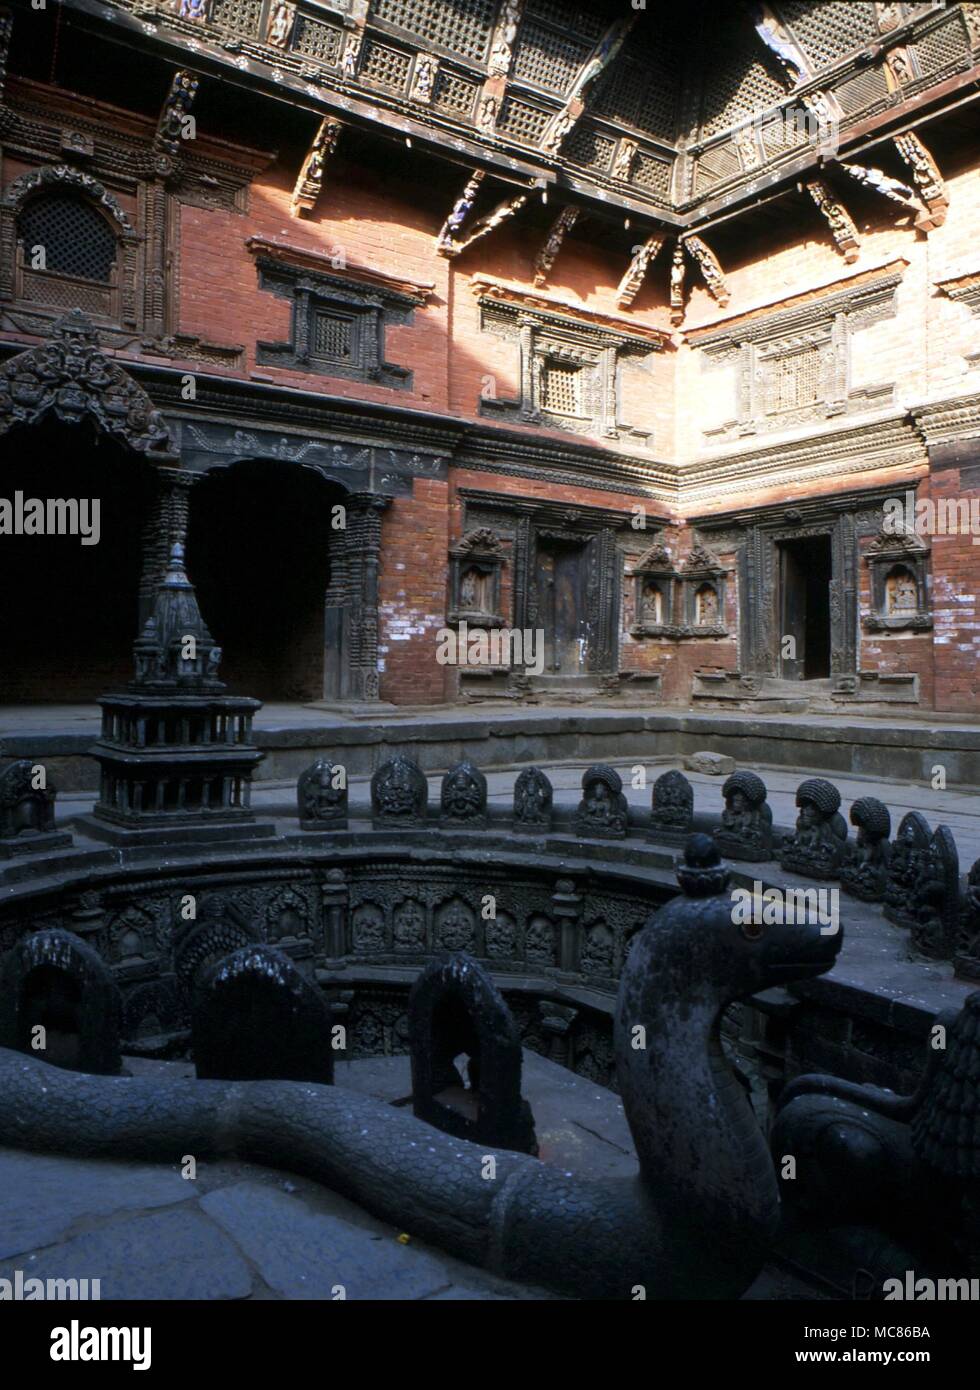 NEPAL - Tusa Hiti The snake-surrounded sunken bath of the Tusa Hiti, Kathmanndu, built 1670 Stock Photo